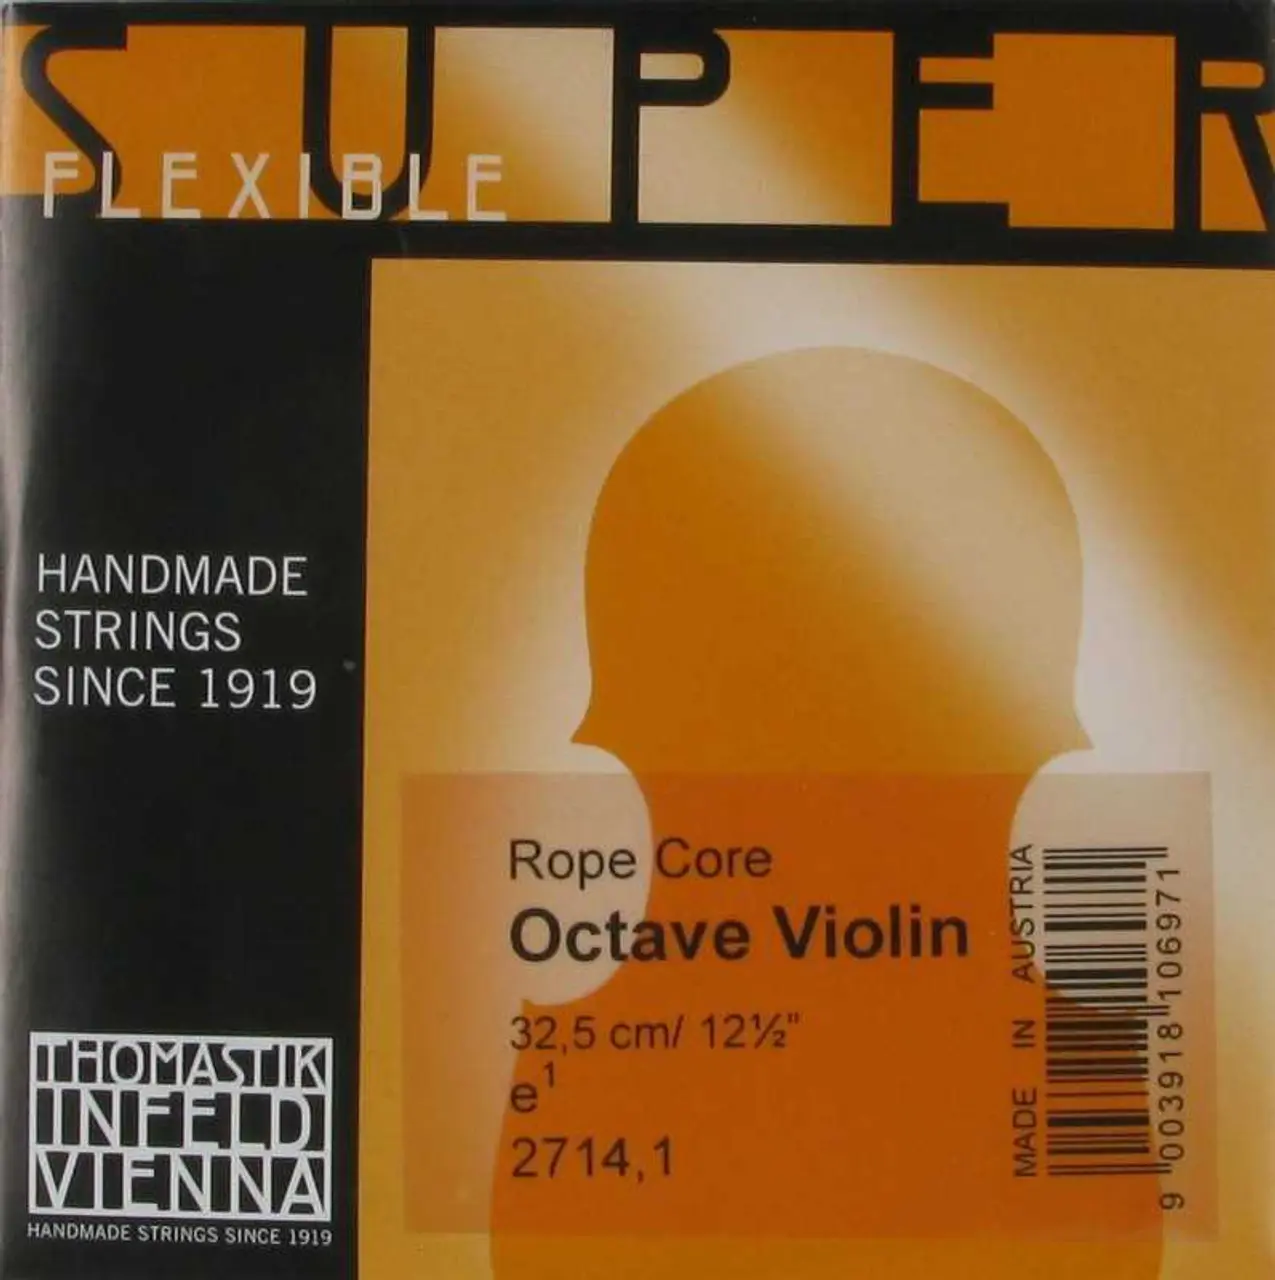 thomastik octave violin strings - Where are Thomastik strings made